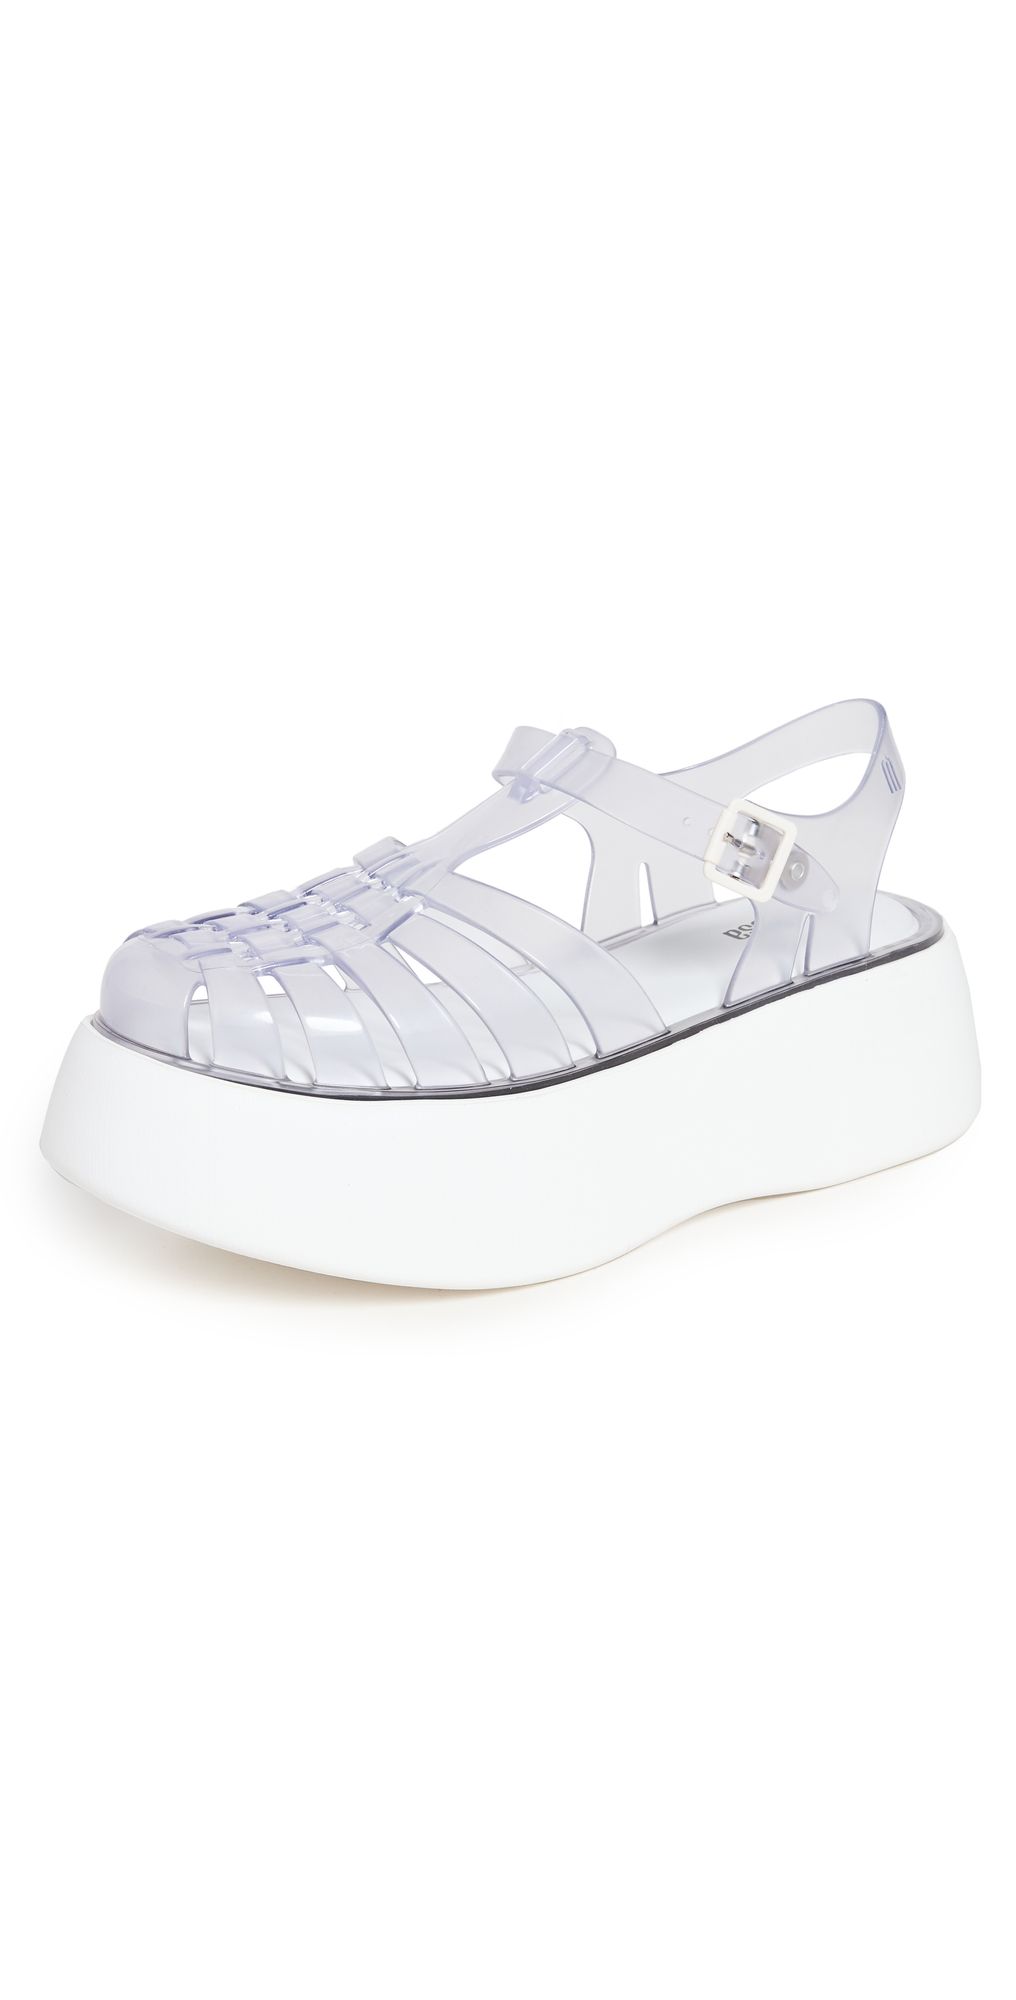 Possession Plato Sandals | Shopbop